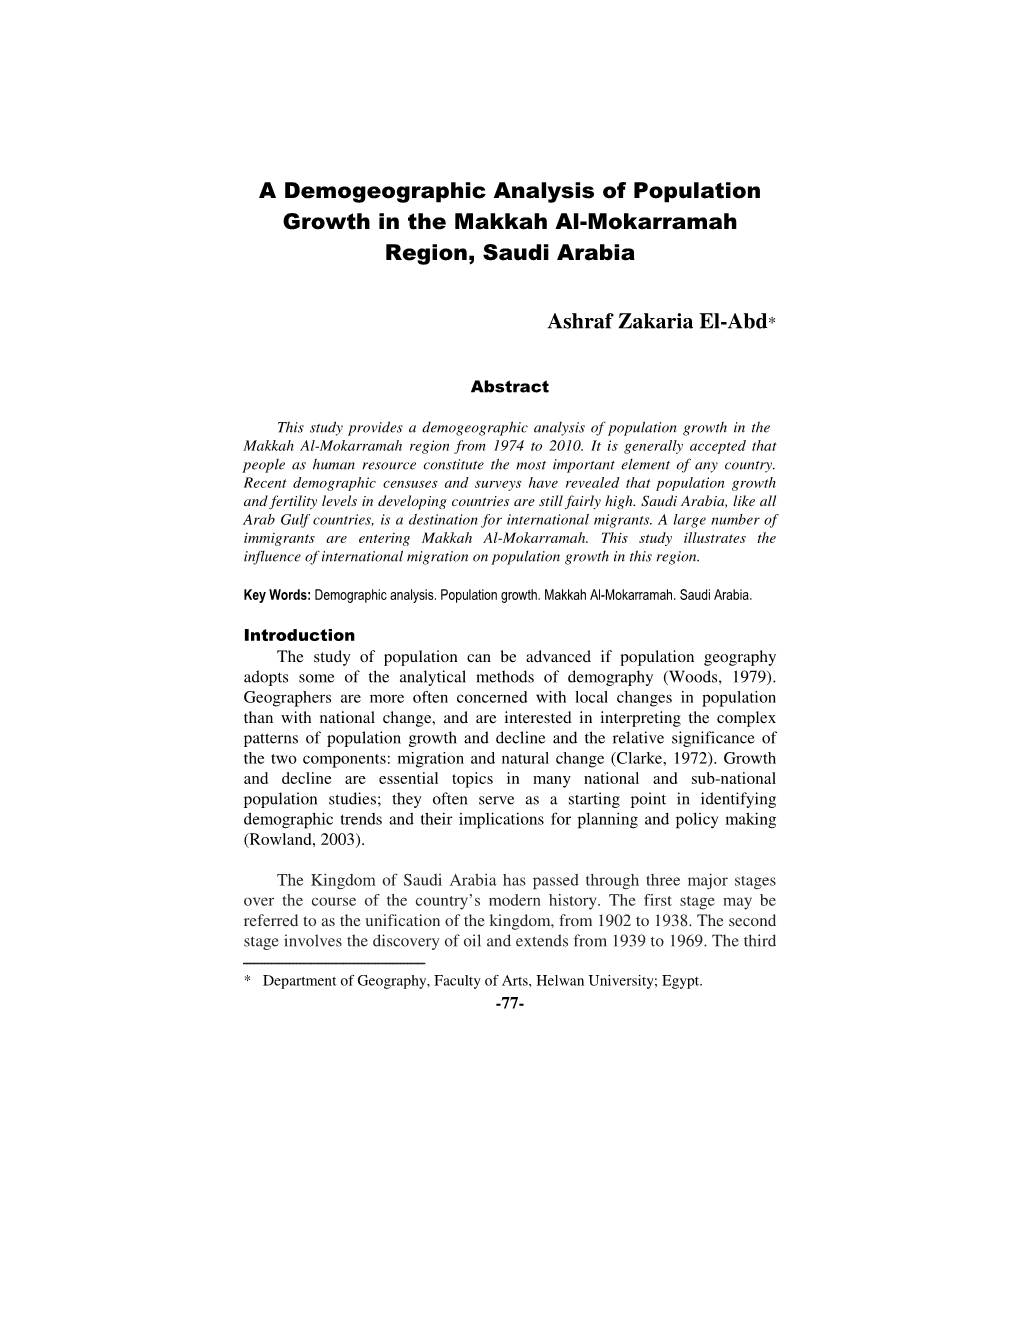 A Demogeographic Analysis of Population Growth in the Makkah Al-Mokarramah Region, Saudi Arabia Ashraf Zakaria El-Abd*